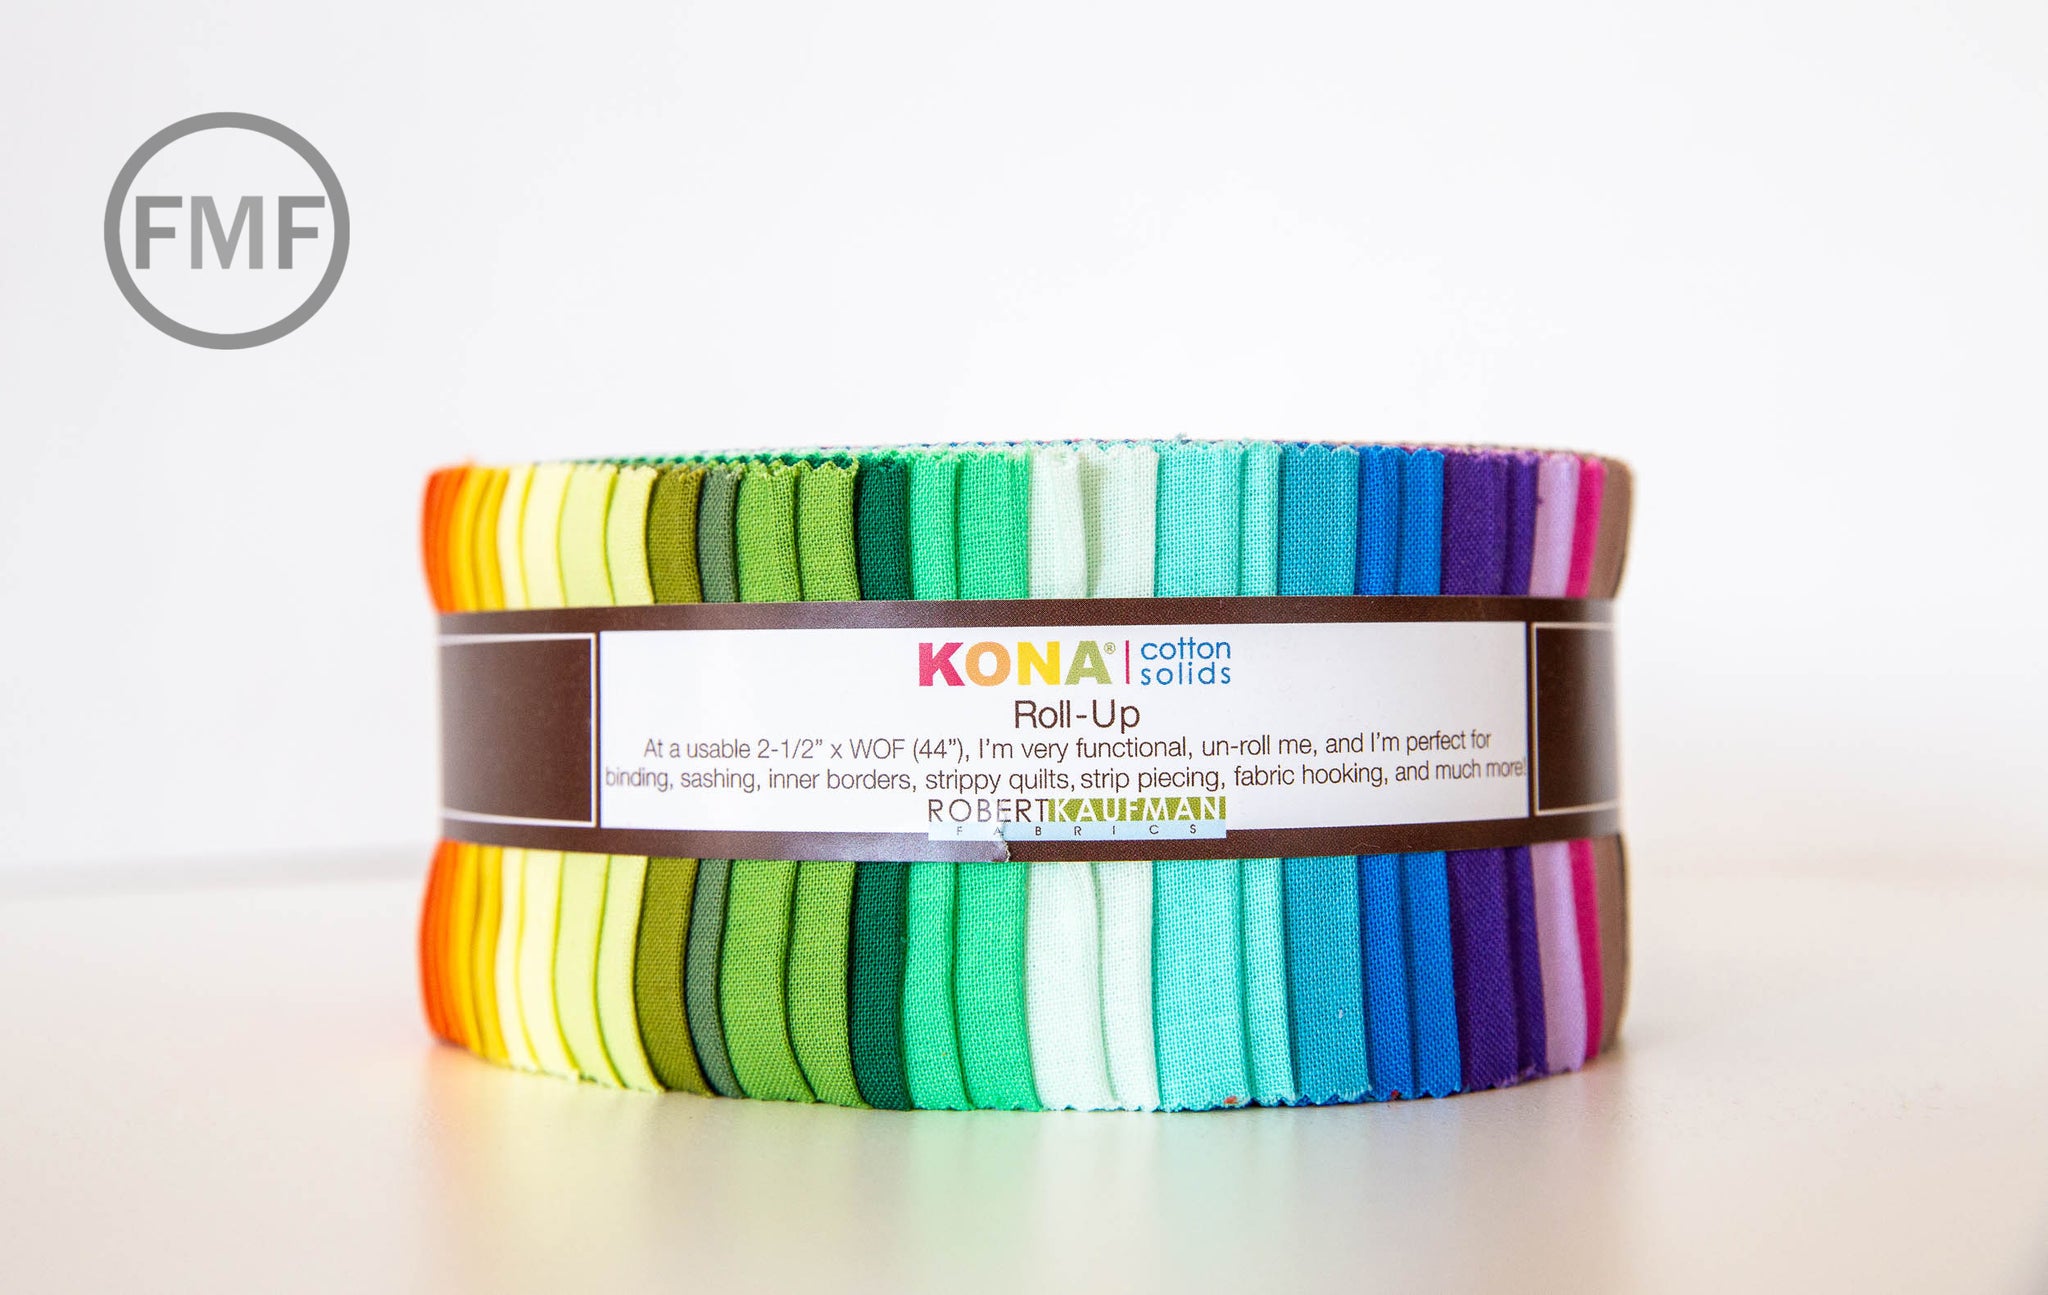 Kona Cotton New Colors 2019 Roll Up, Kona Cotton Solids, Robert